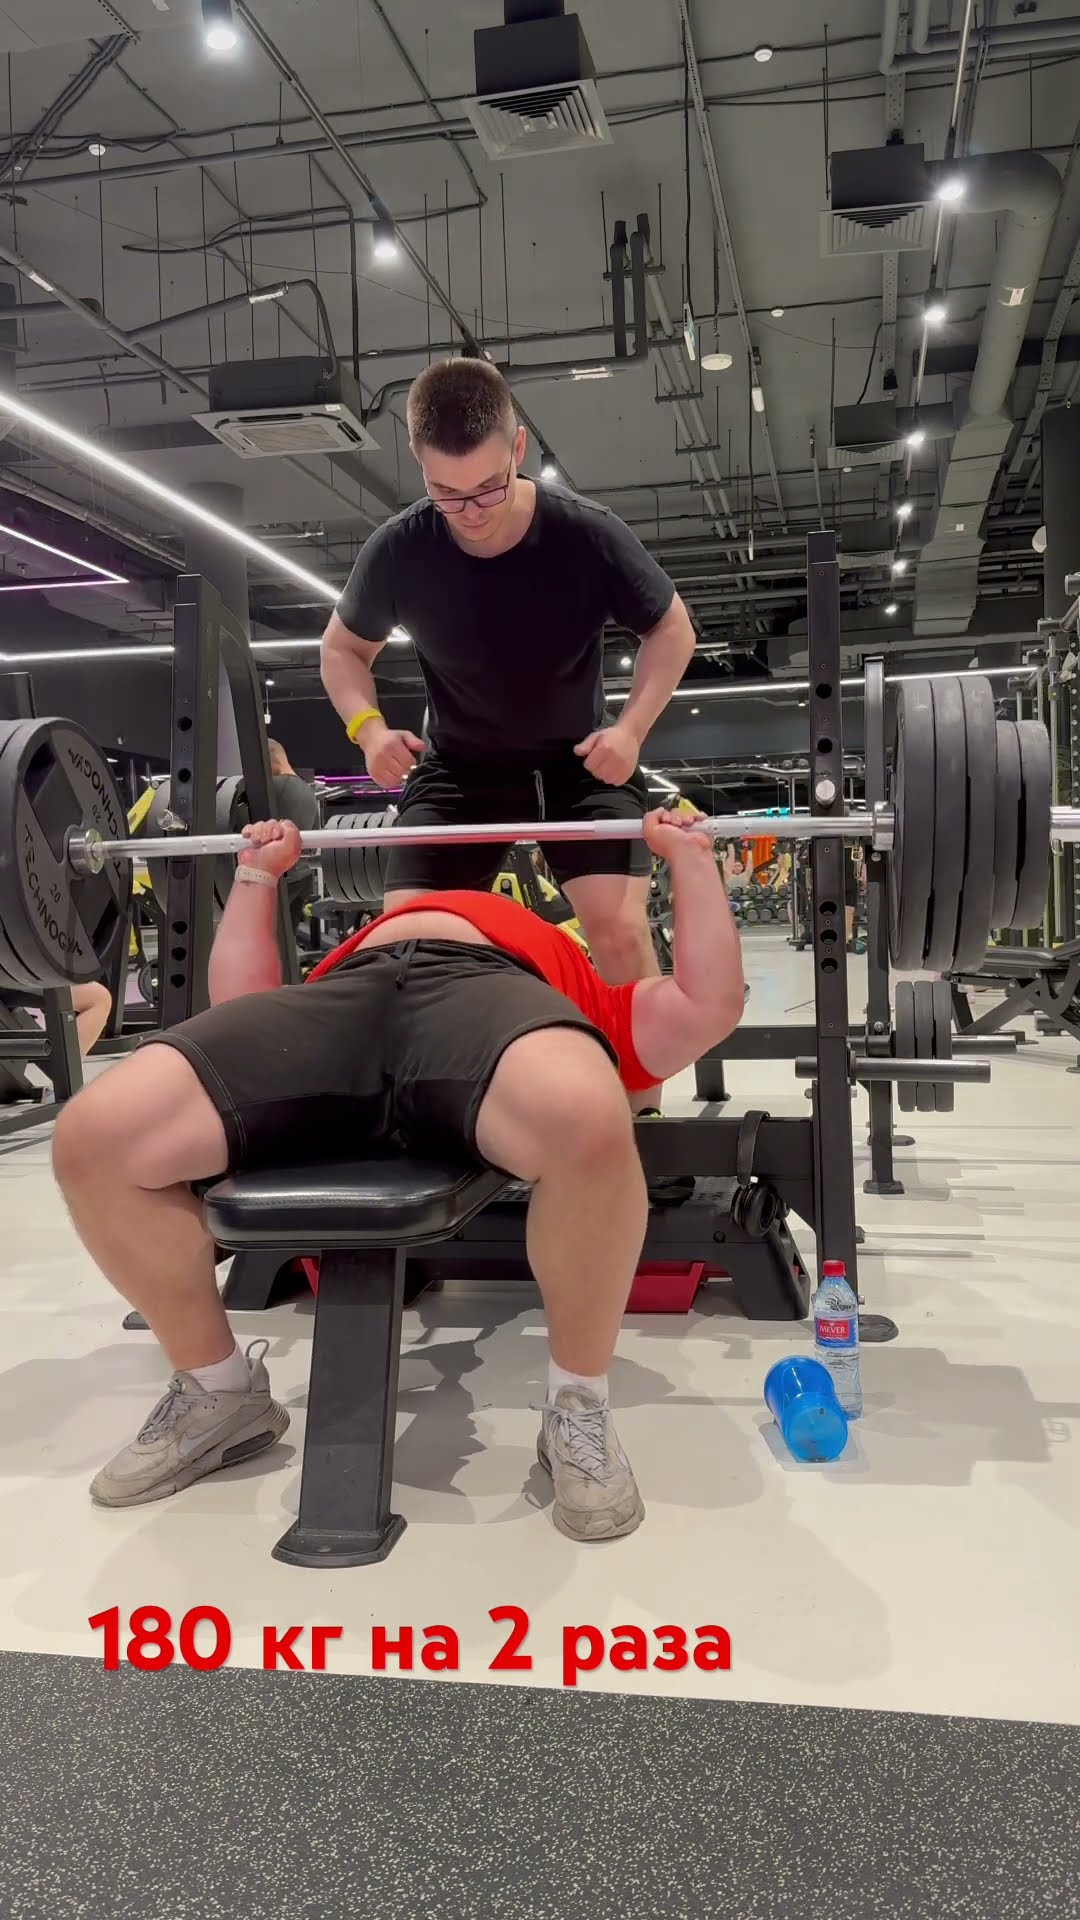 Превью: Жим лежа 180 кг на 2 раза, путь к 200 кг на раз #powerlifting #dubstep #music #жимлежа #спорт #sport